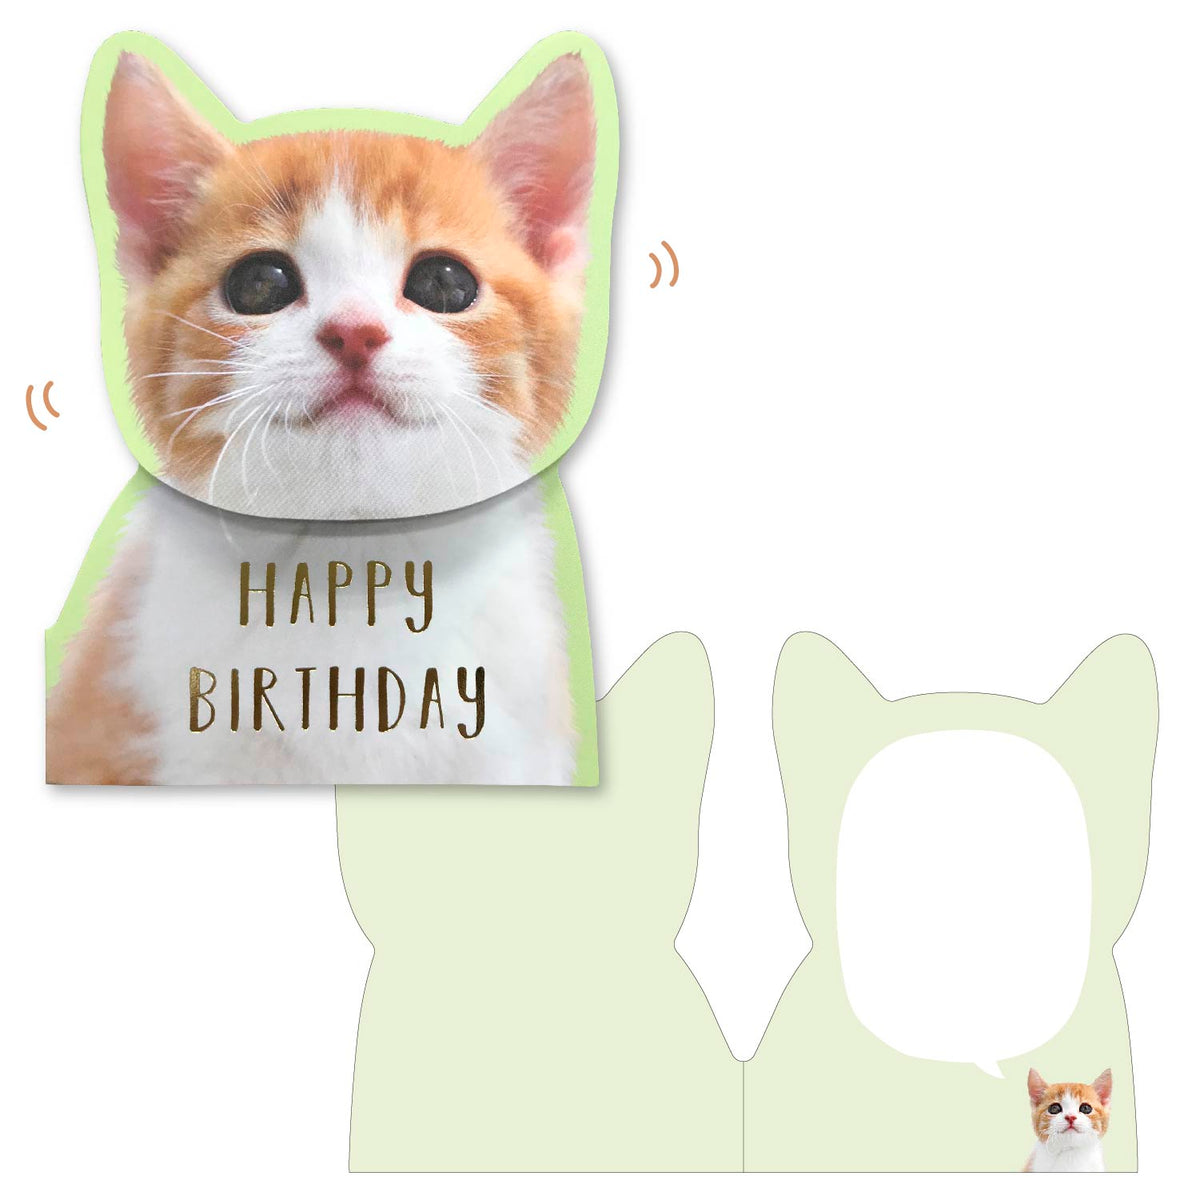 cute happy birthday cat images